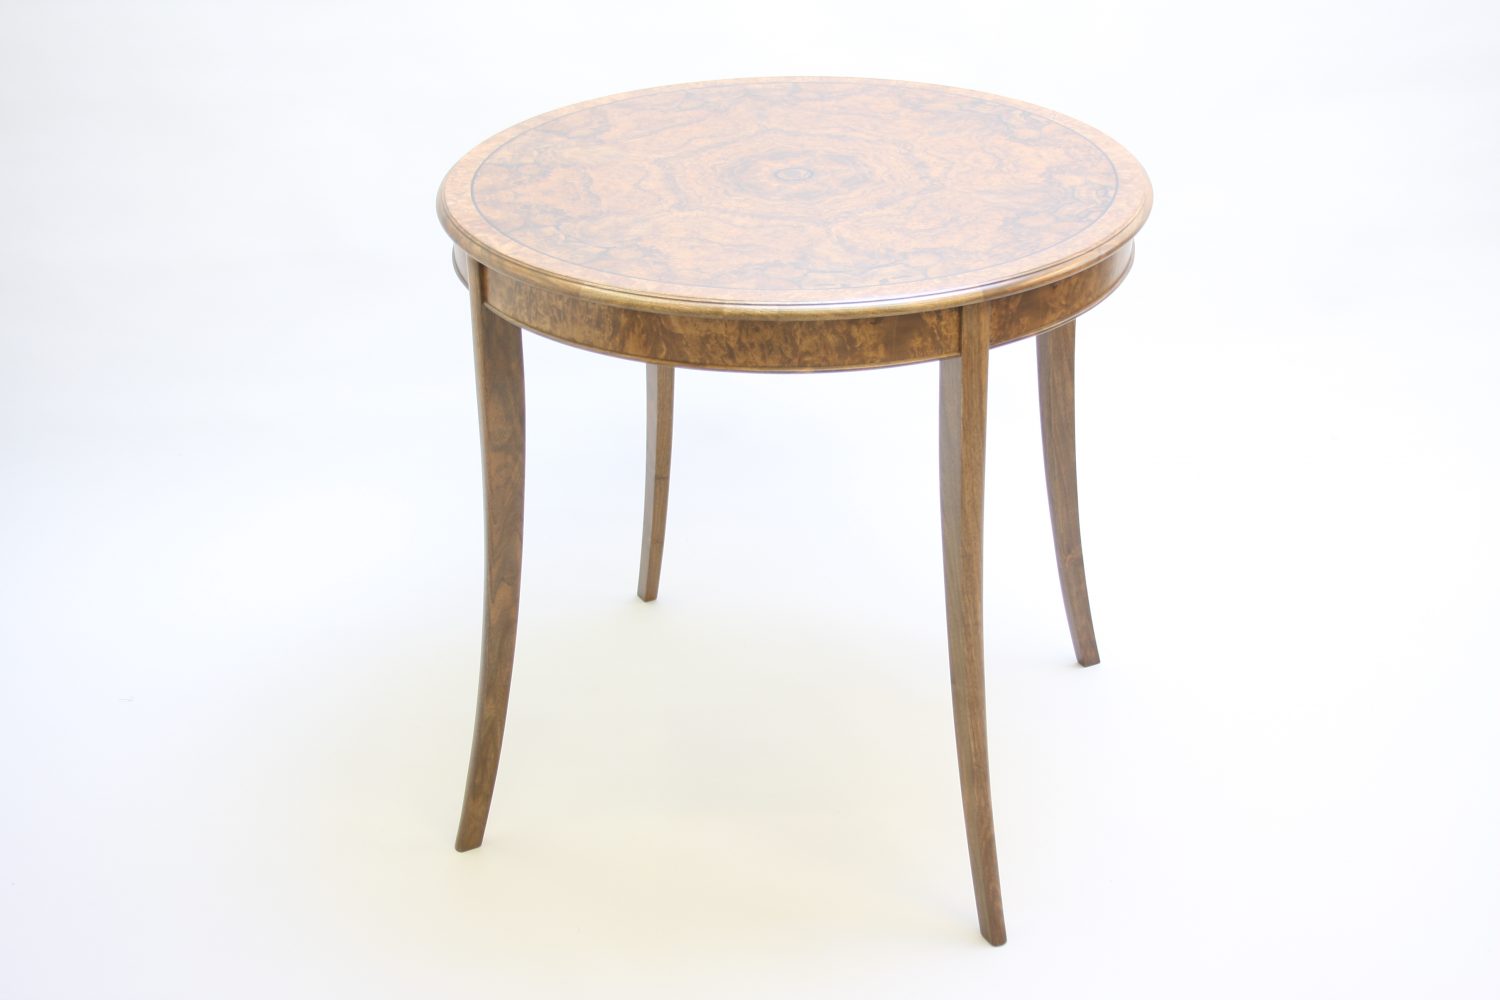 Walnut circular table